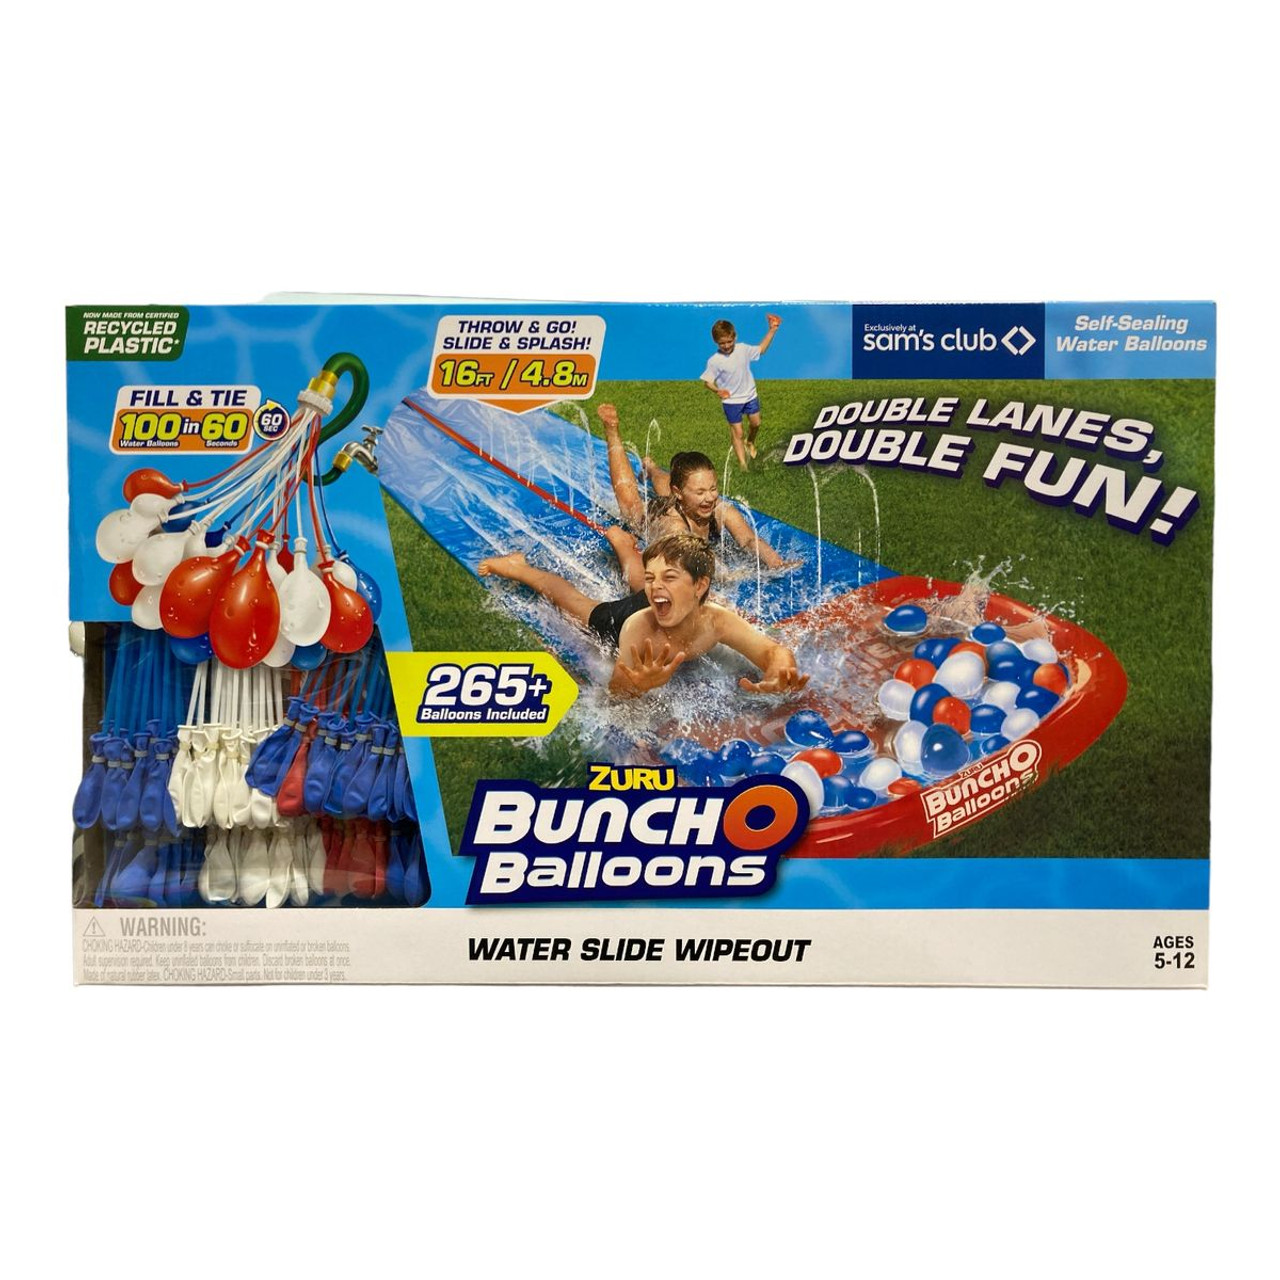 Zuru™ Bunch o' Balloons Double Lane Water Slide Wipeout product image